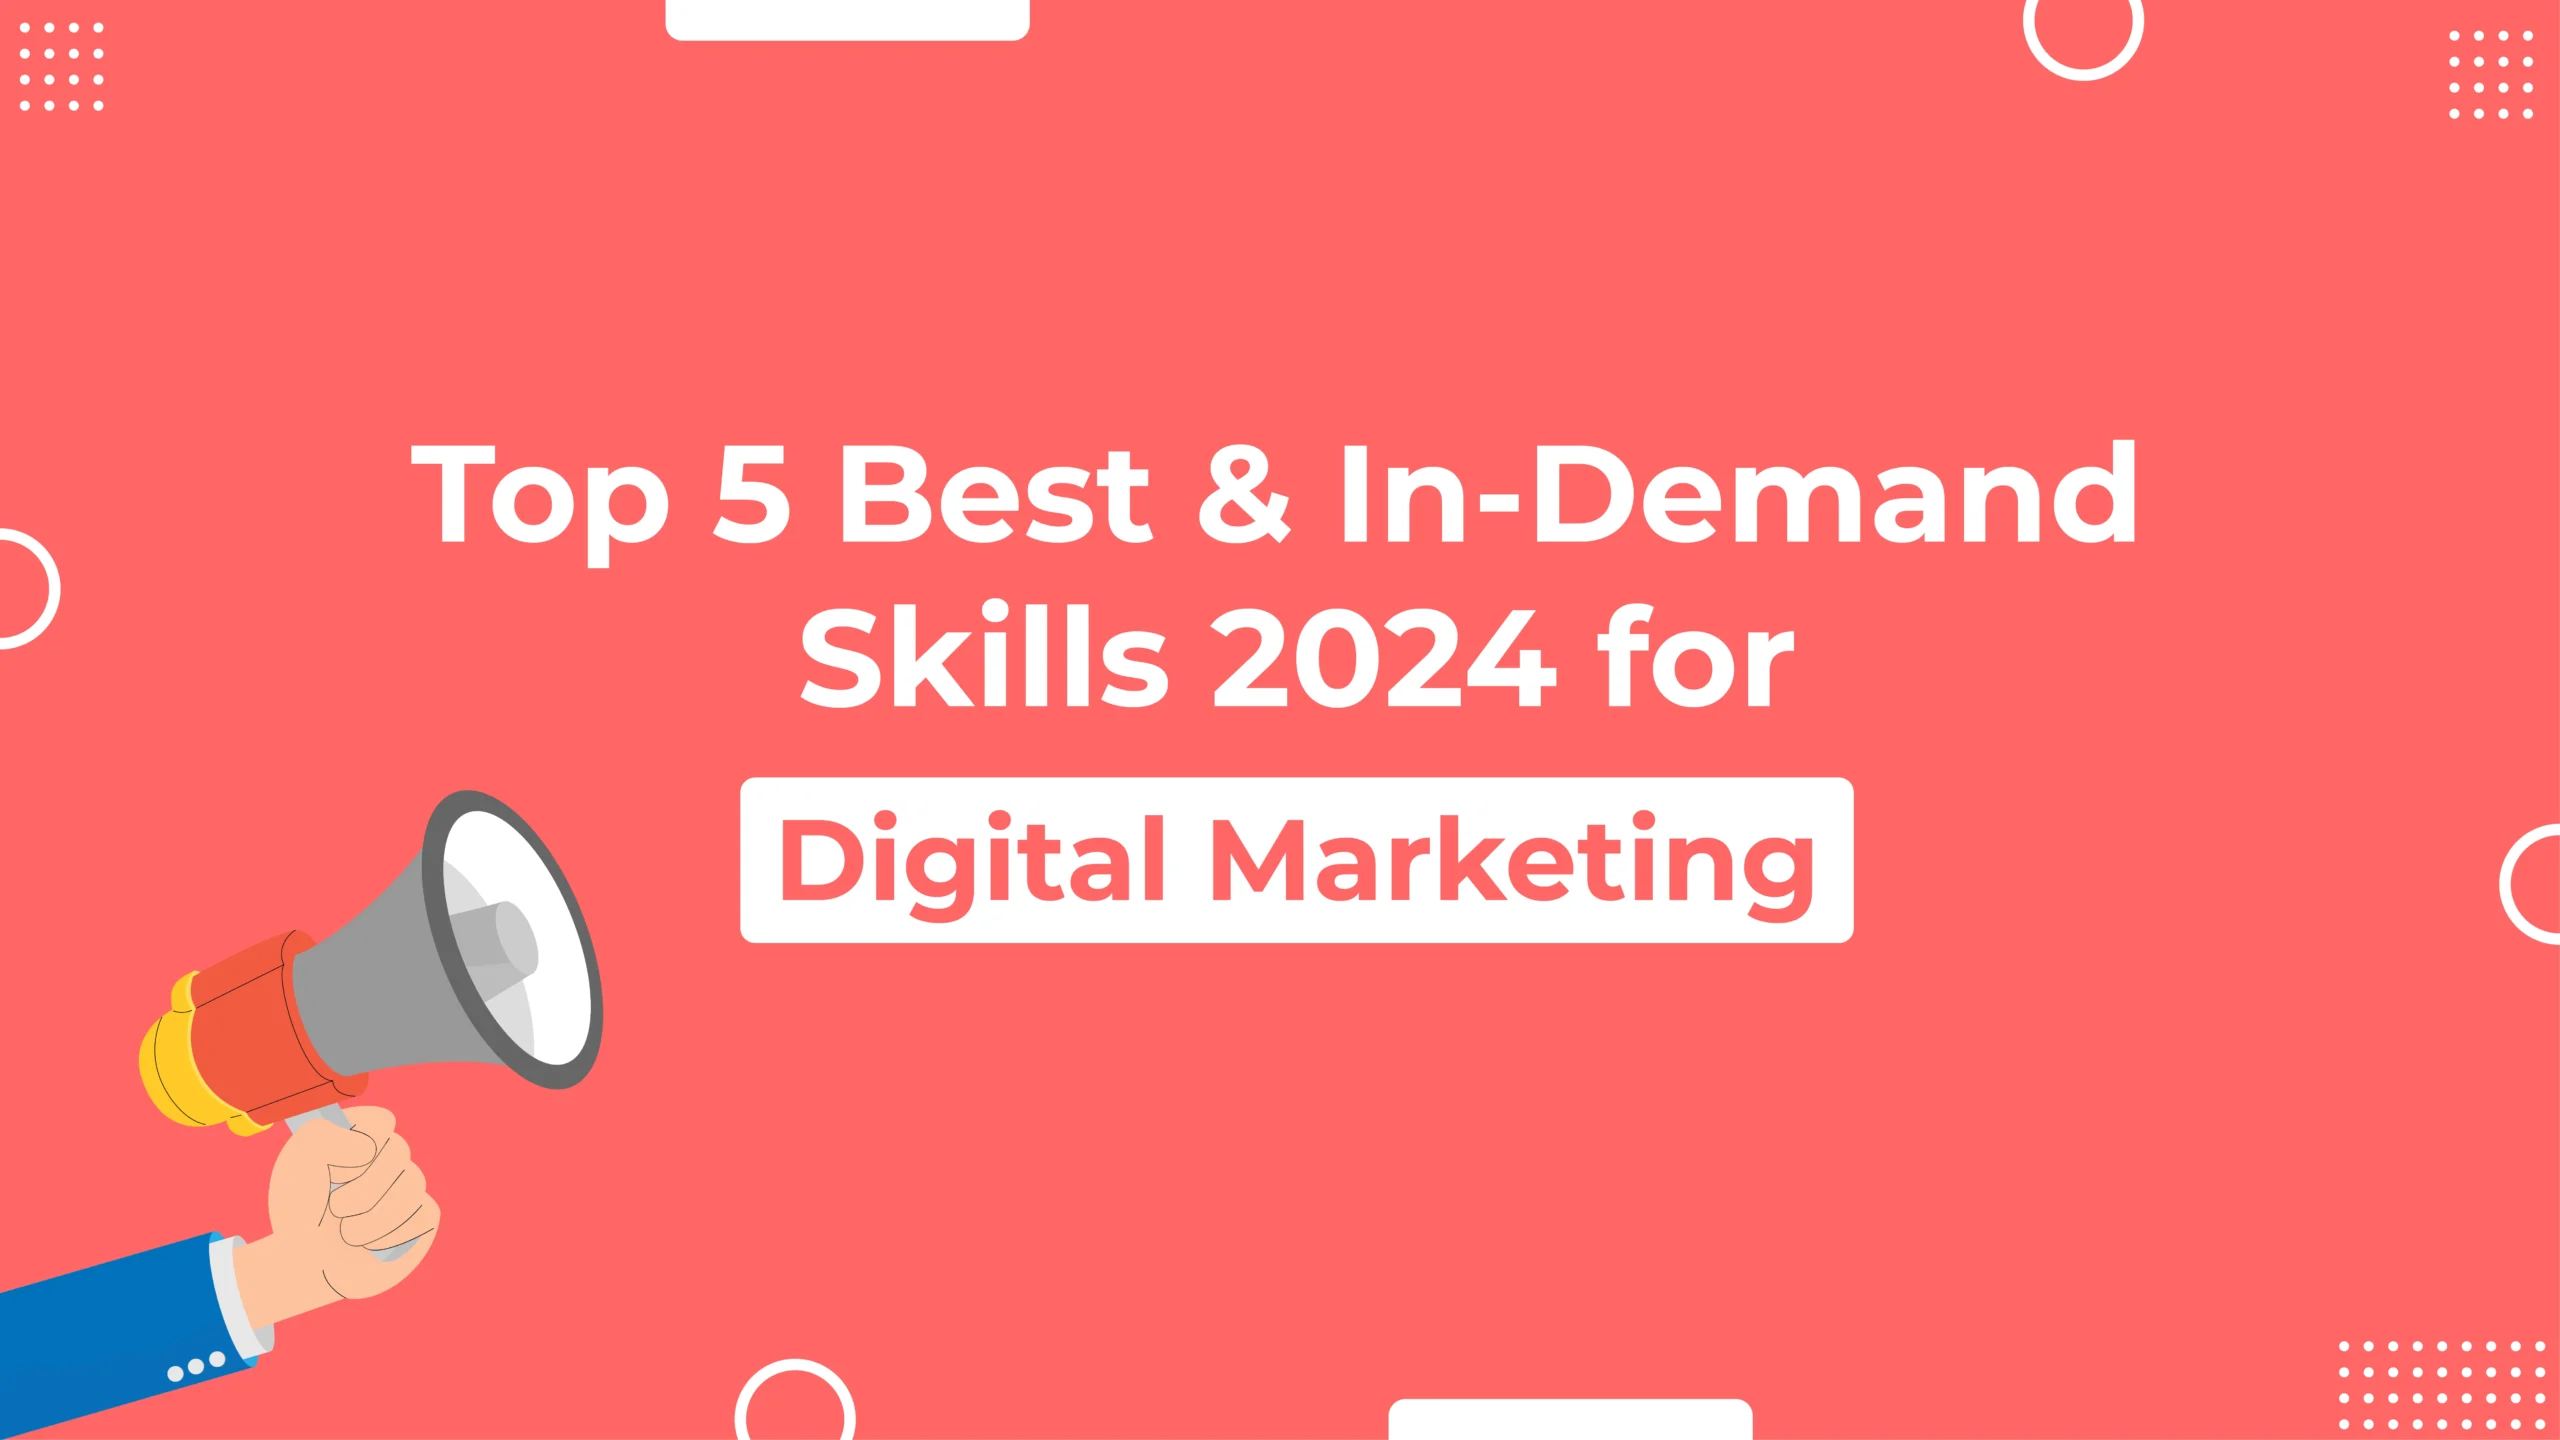 Digital Marketing Agency Top 5 Best and In-Demand Skills 2024